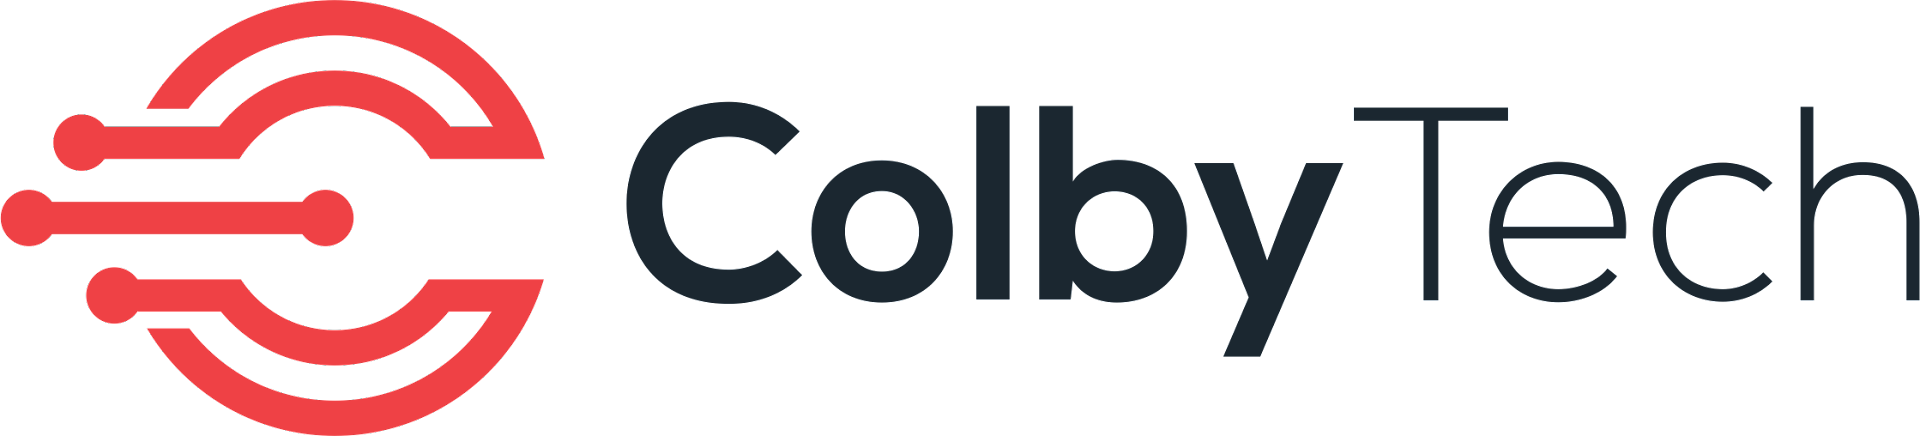 ColbyWebsite Logo